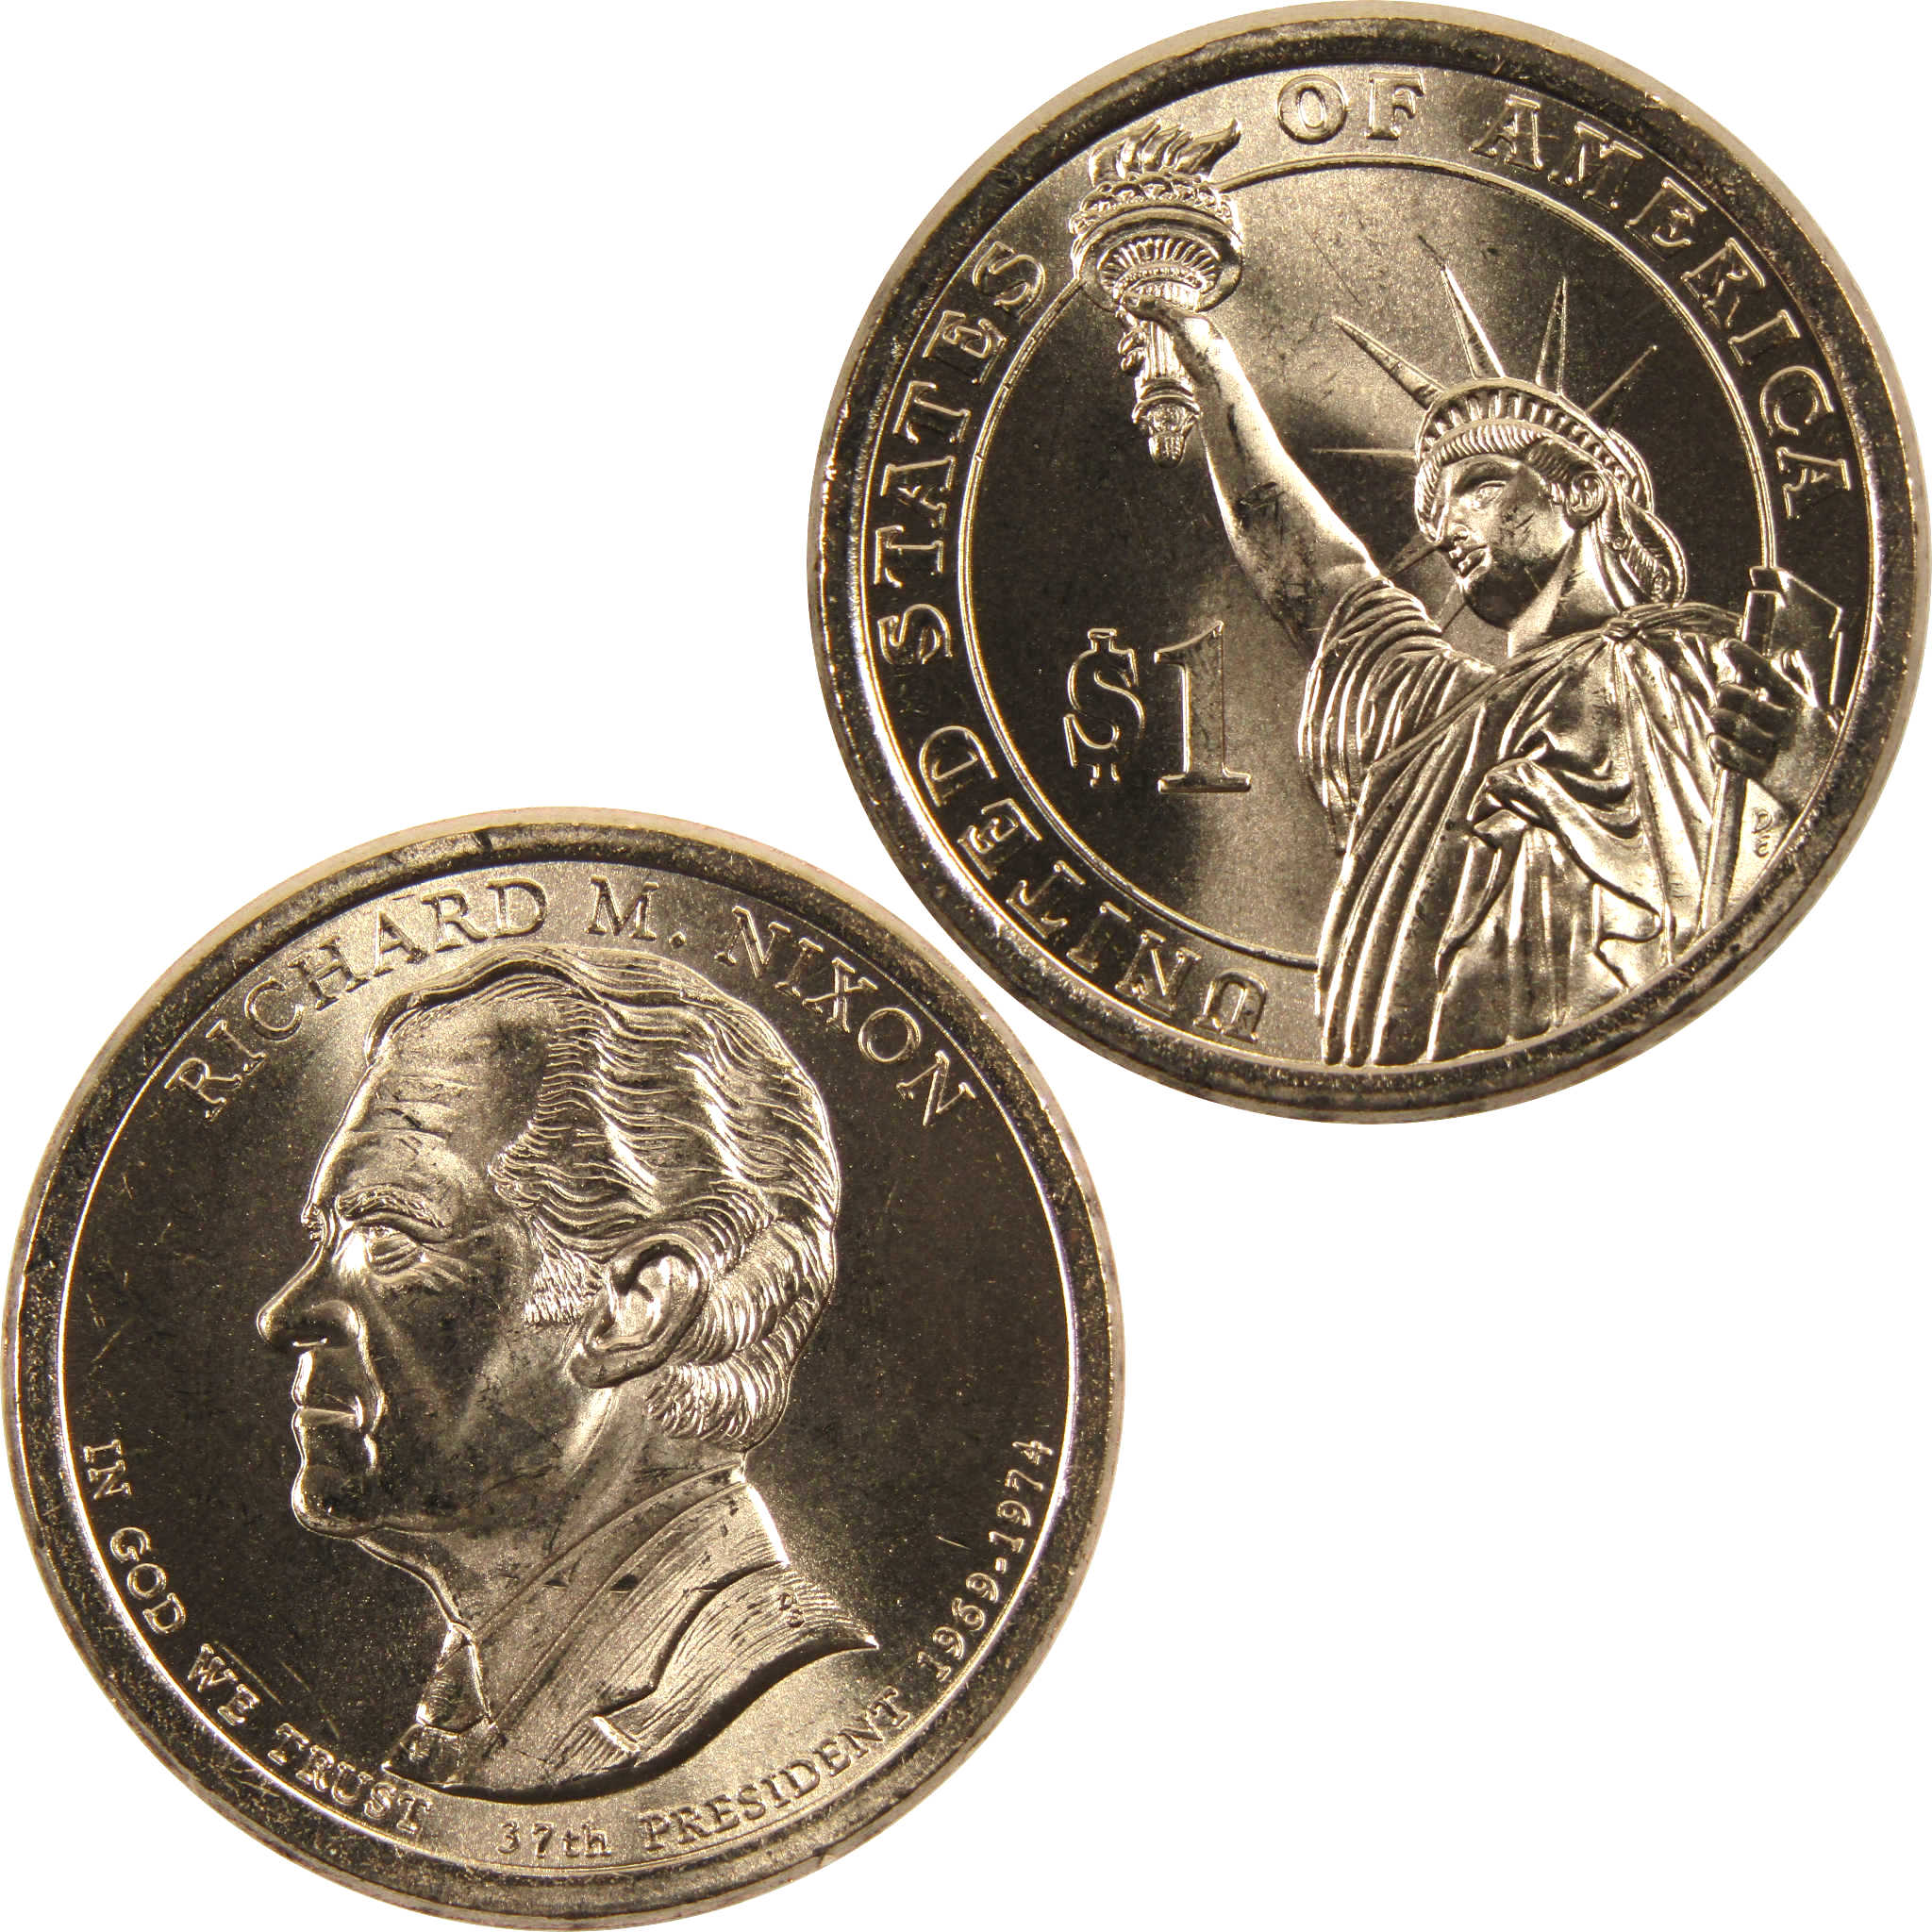 2016 P Richard M Nixon Presidential Dollar BU Uncirculated $1 Coin